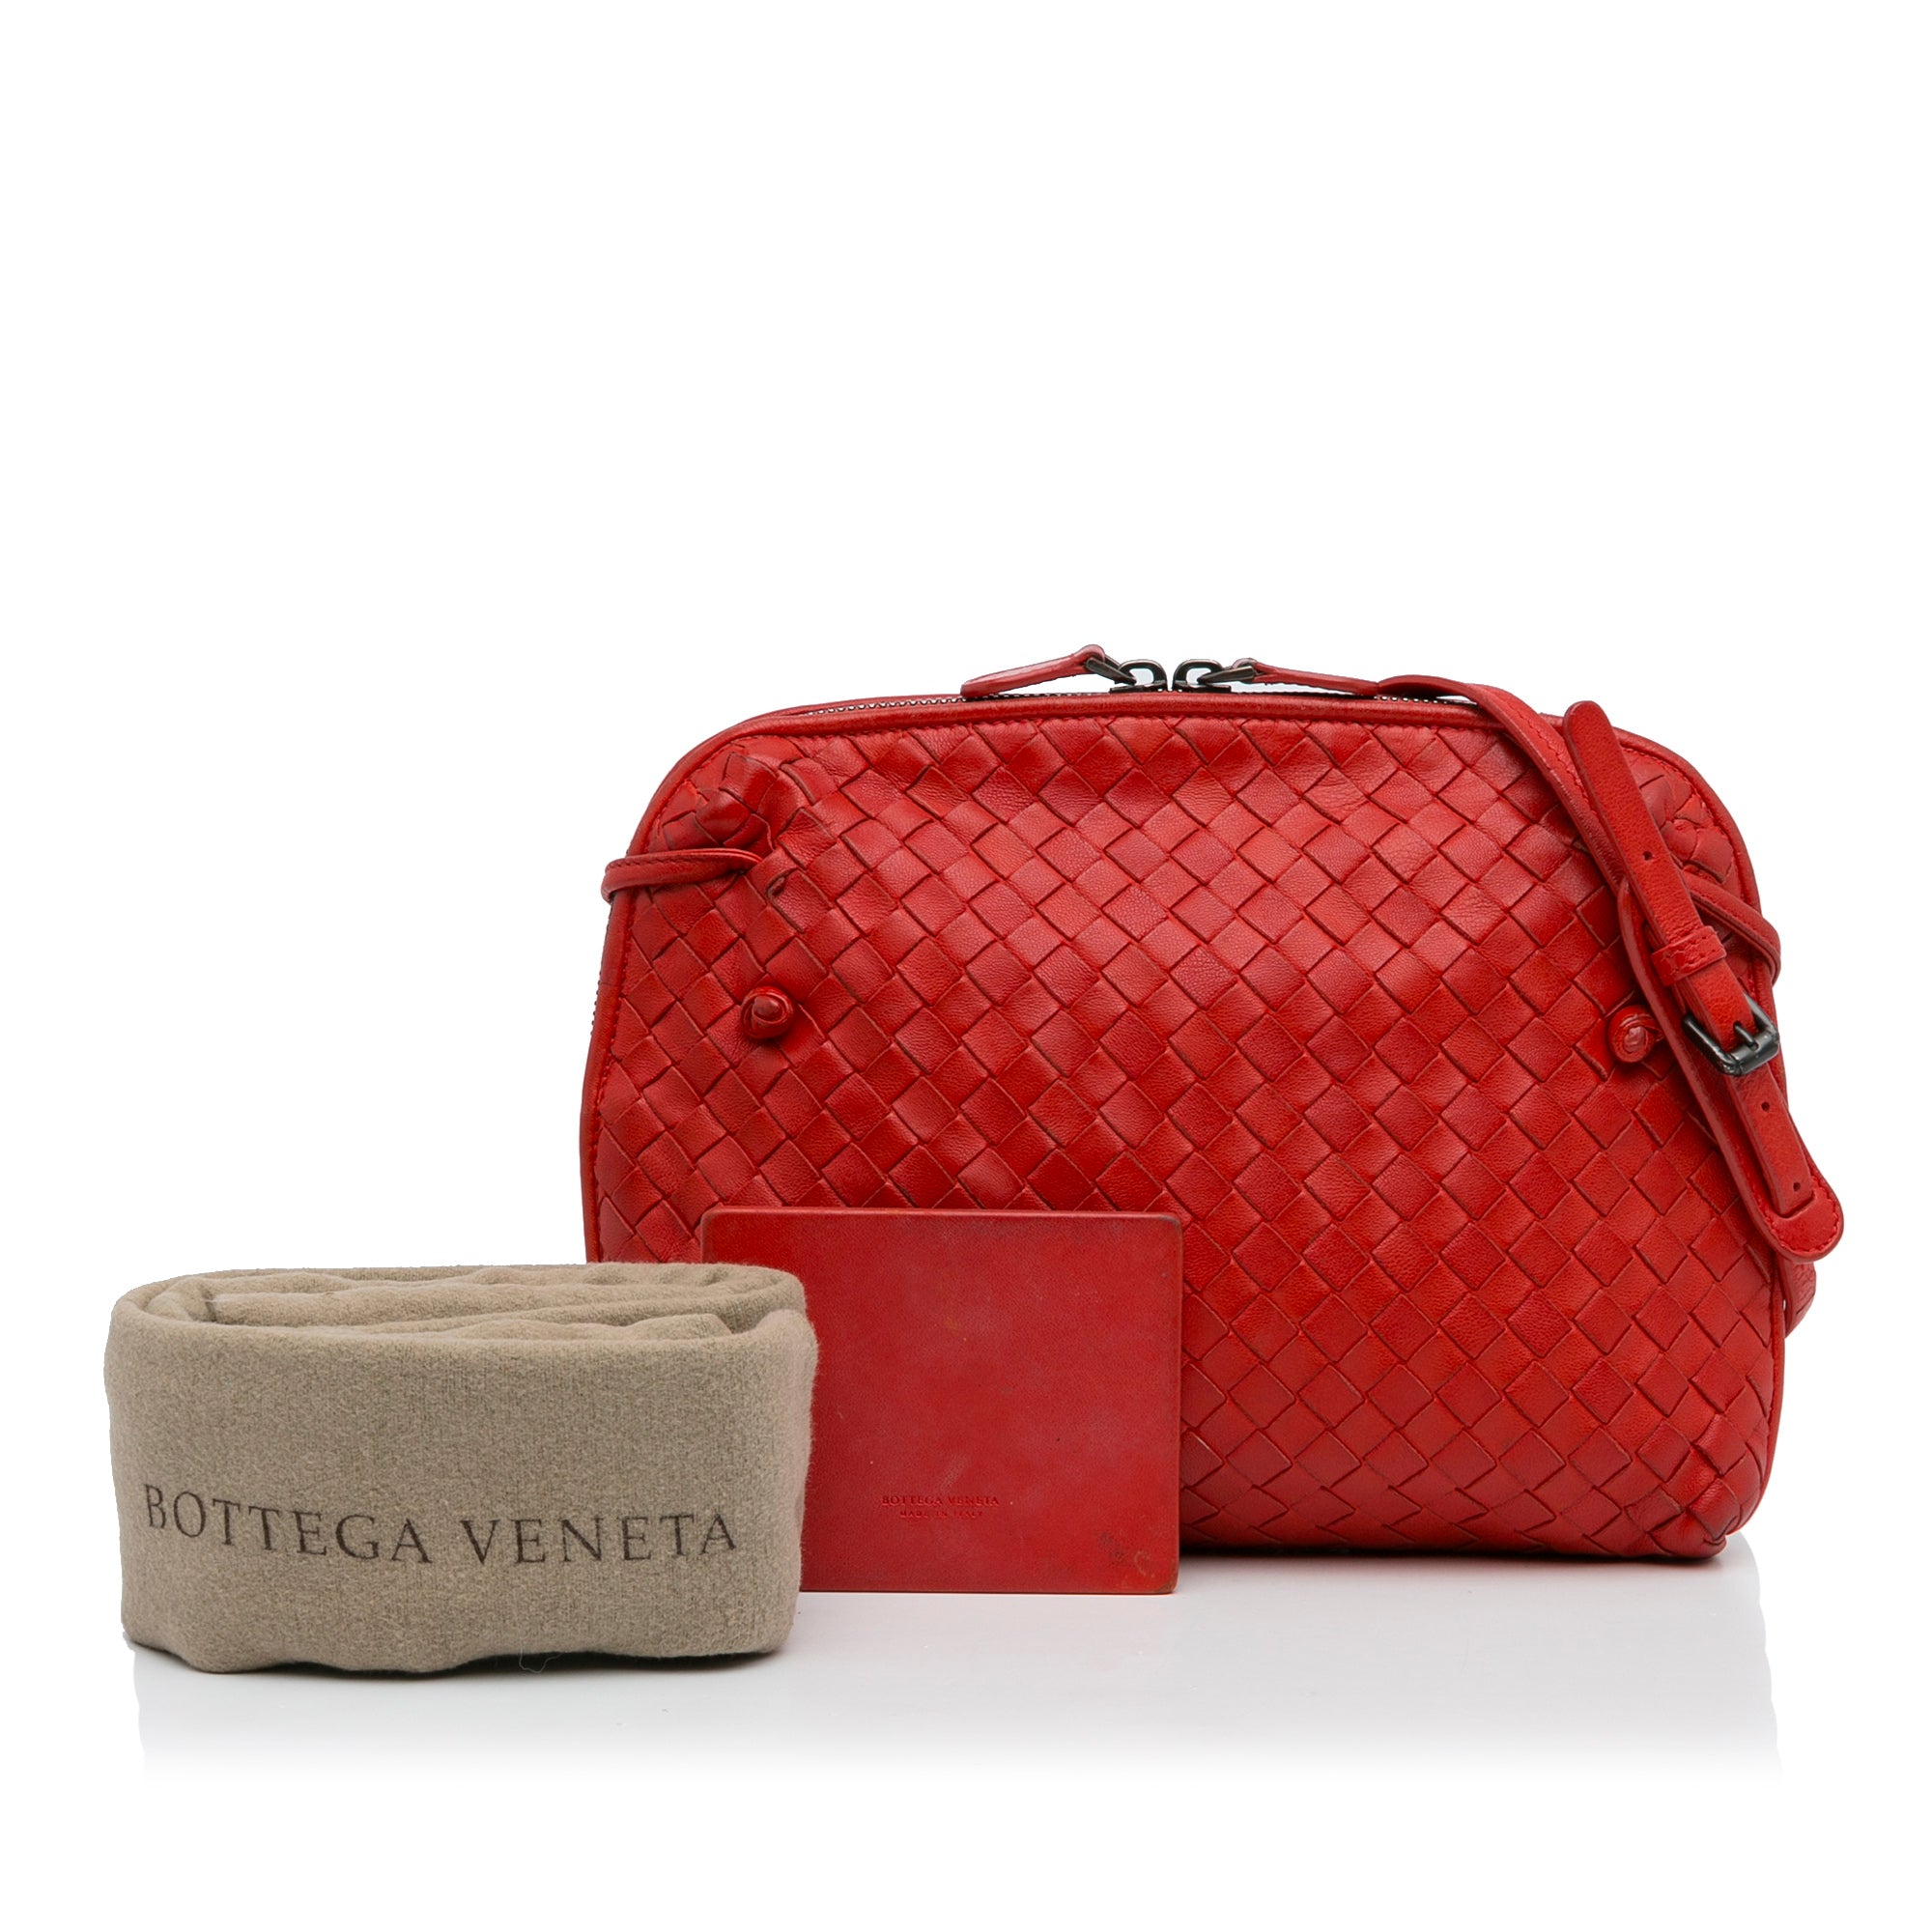 Bottega Veneta Nodini Bag  Luxury Fashion Clothing and Accessories